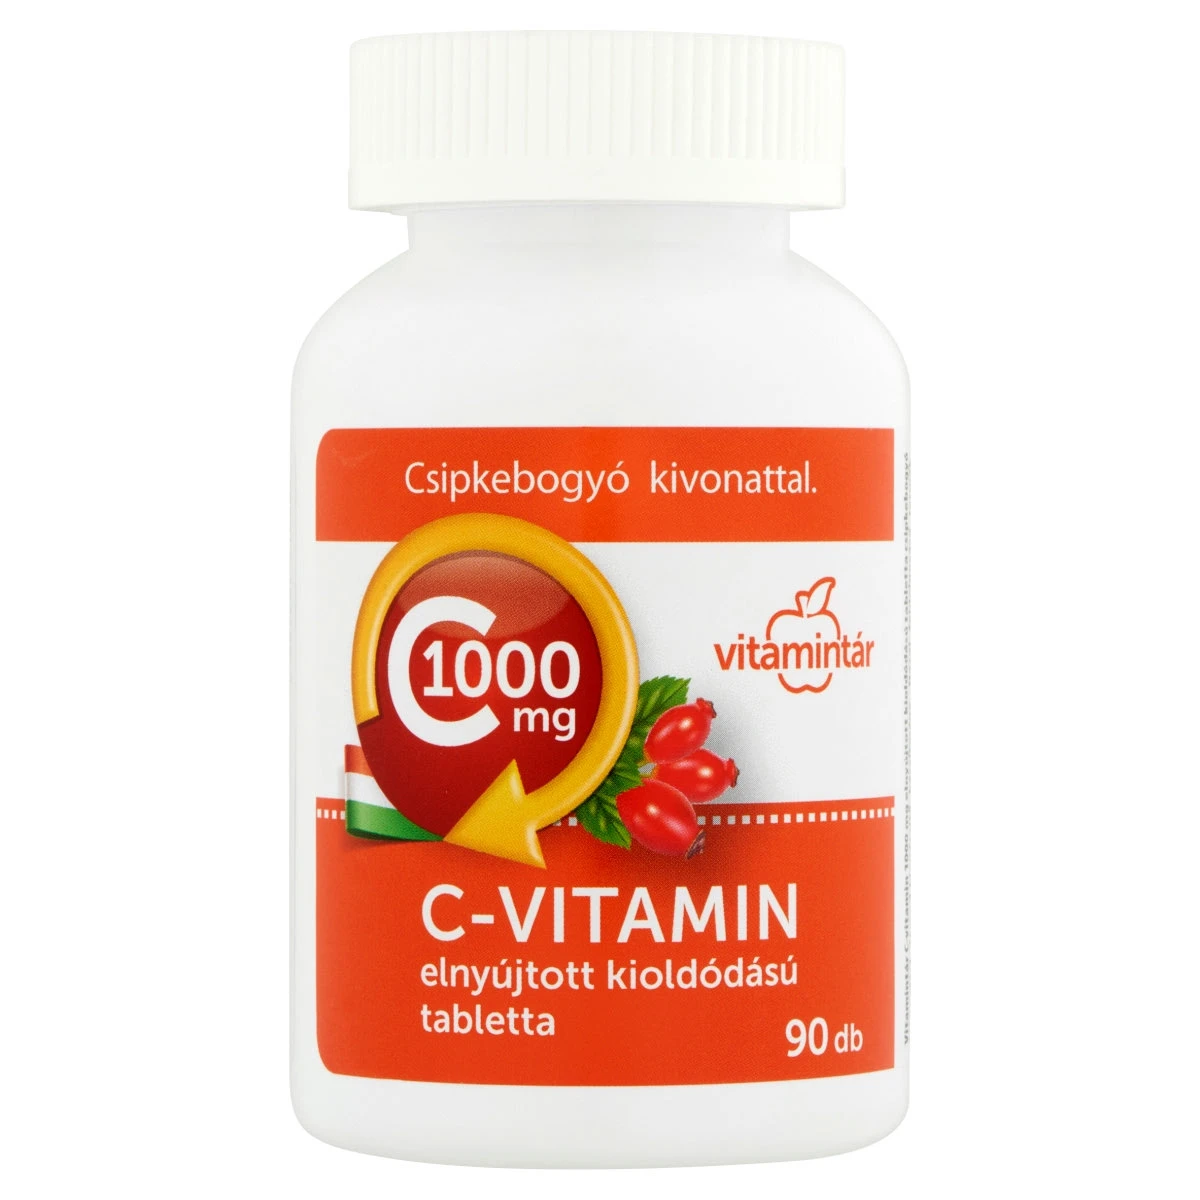 Vitamintár C Vitamin tabletta csipkebogyóval, 90 db